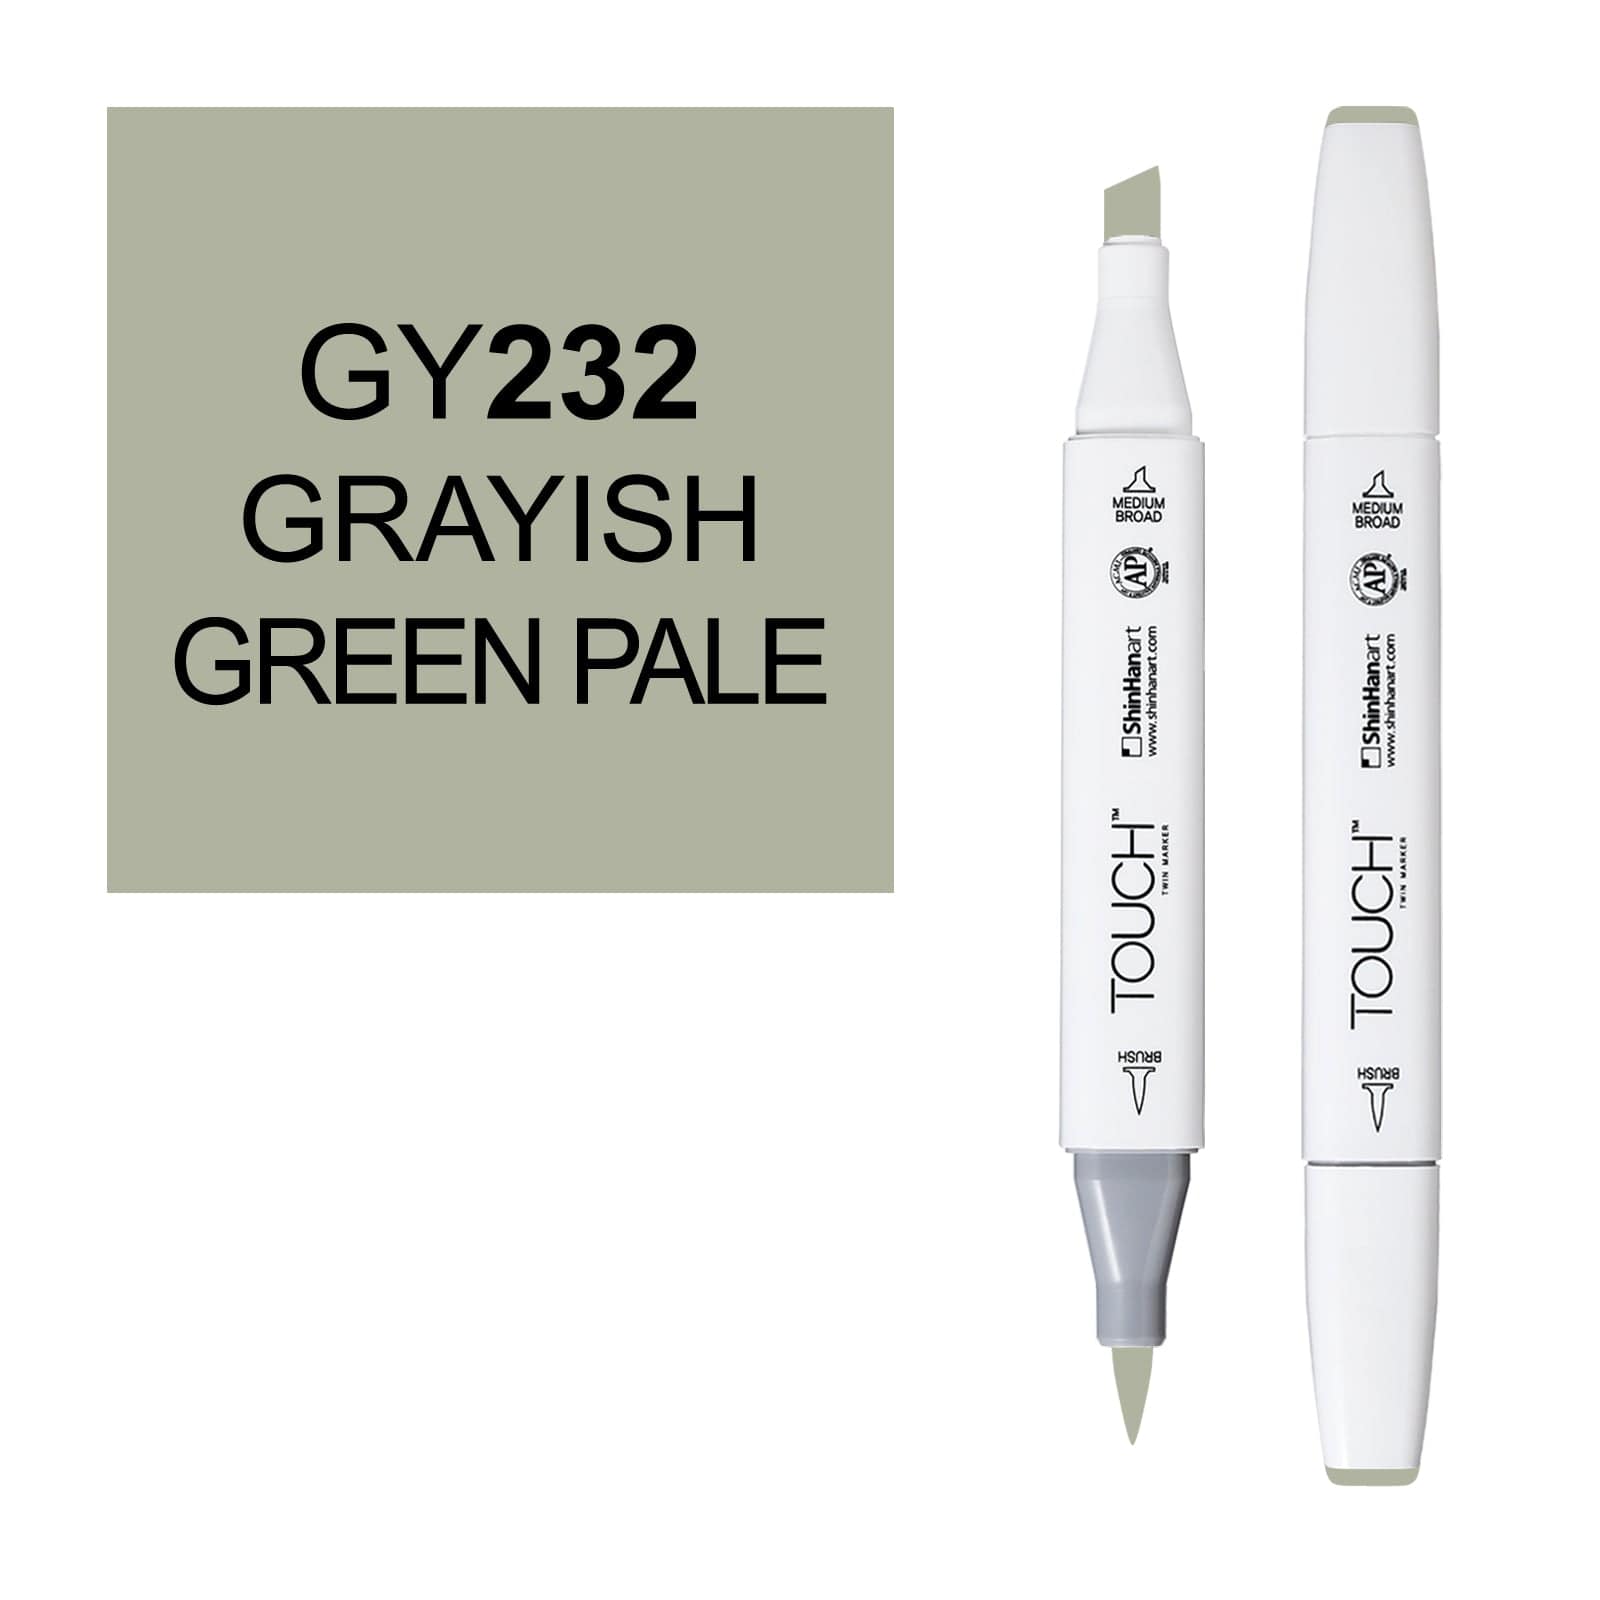 ShinHanart Touch Twin Brush Markers grayish green pale